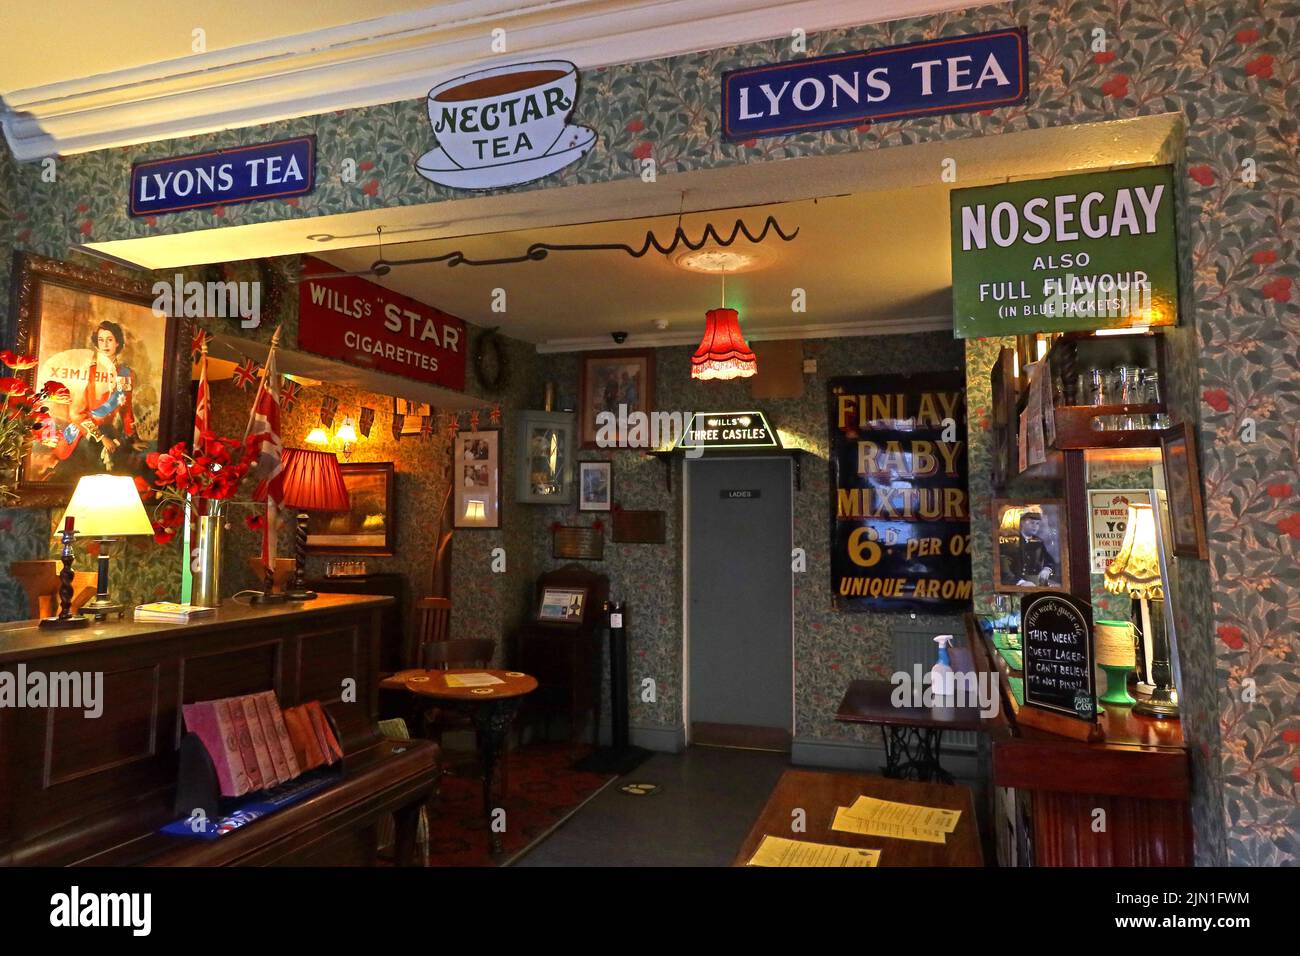 Werbung für Lyons Tea, nosegay auch Full Flavour, Wills, Interior of the Albion Inn, Volunteer St / Park St, Chester, Cheshire, England, UK, CH1 1RN Stockfoto